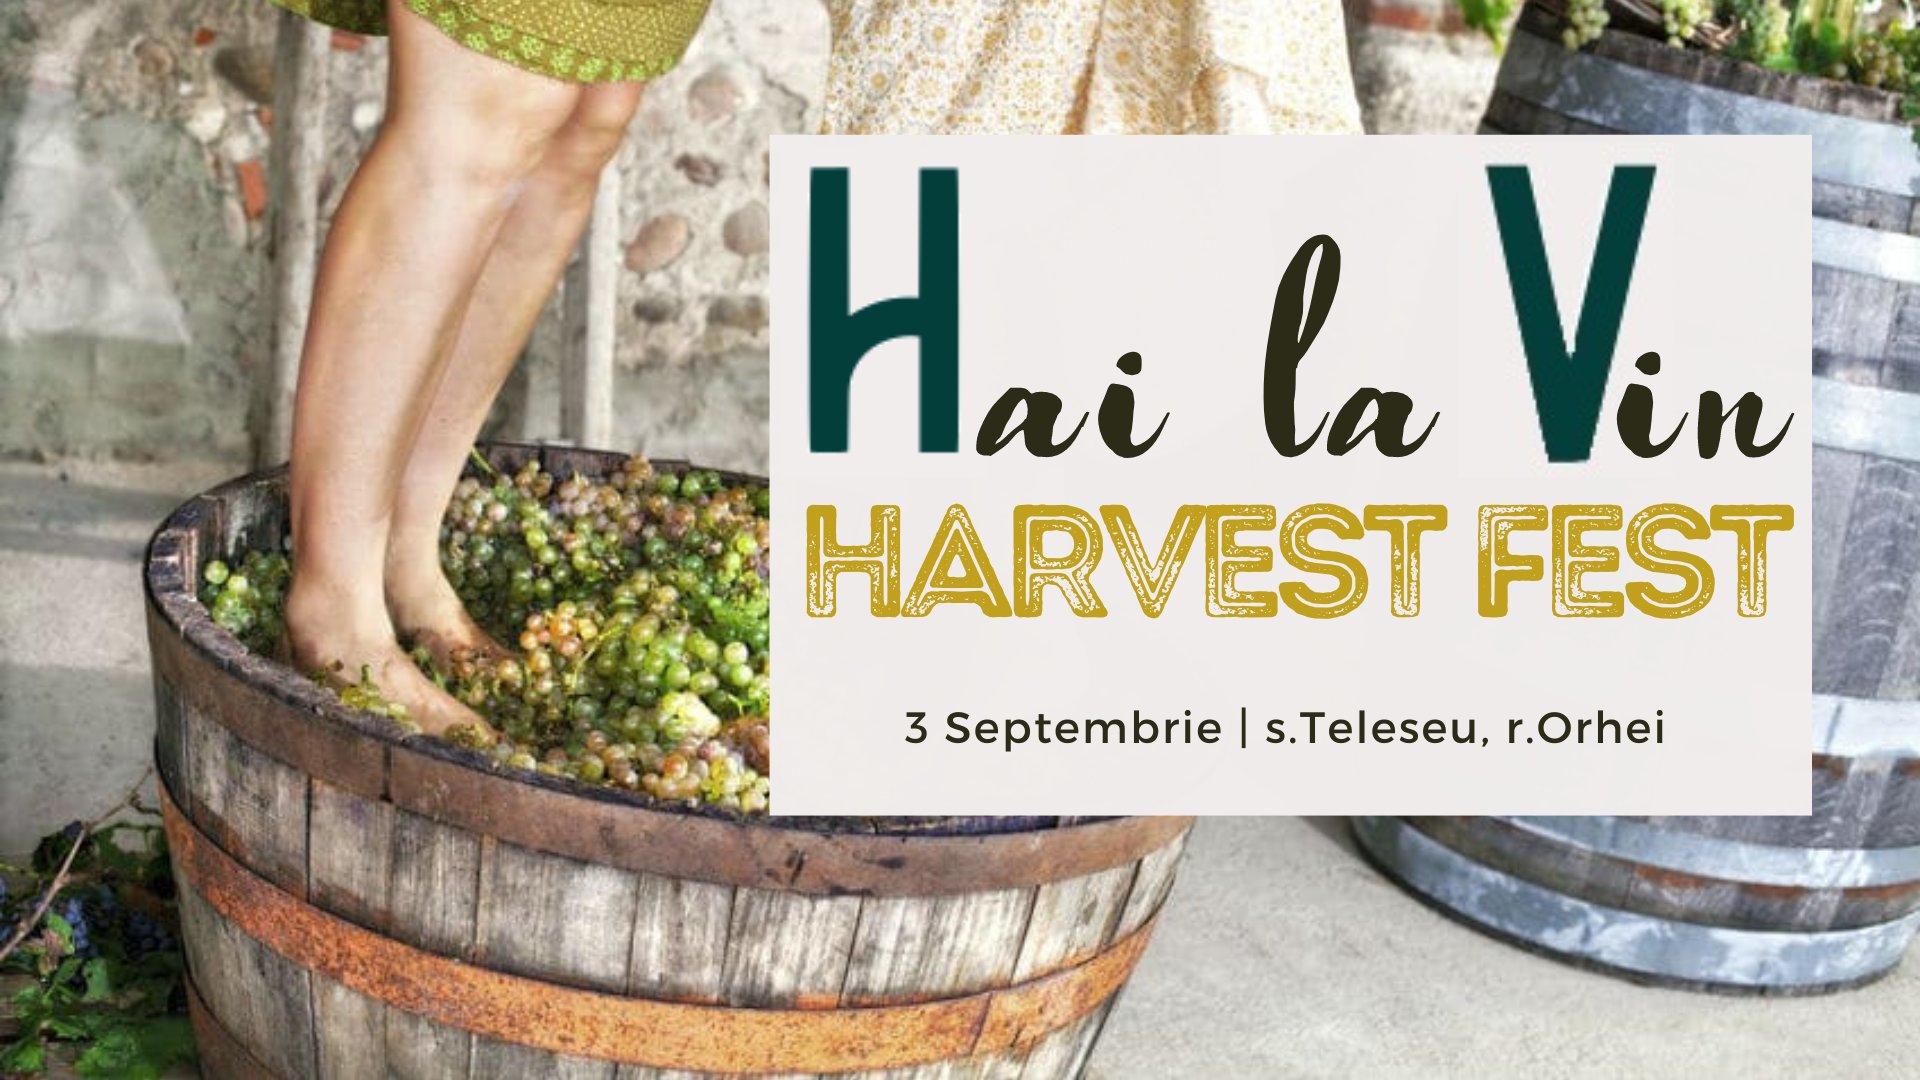 Harvest Fest “Hai la Vin”